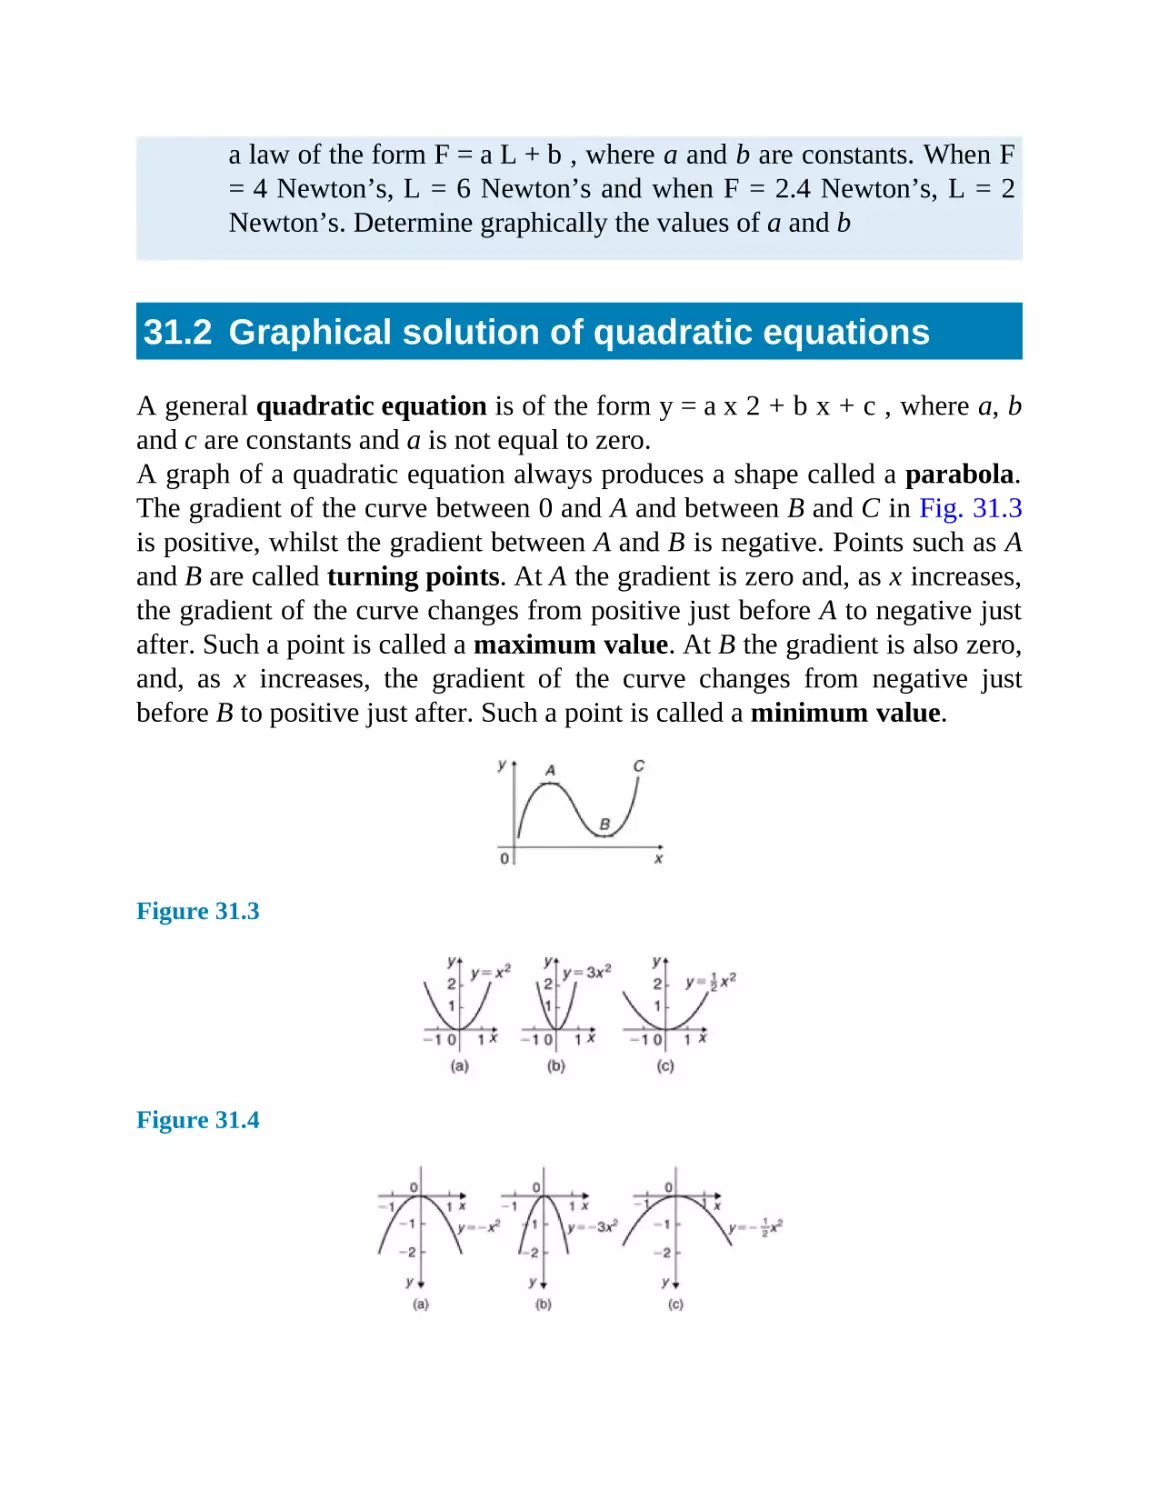 31.2 Graphical solution of quadratic equations